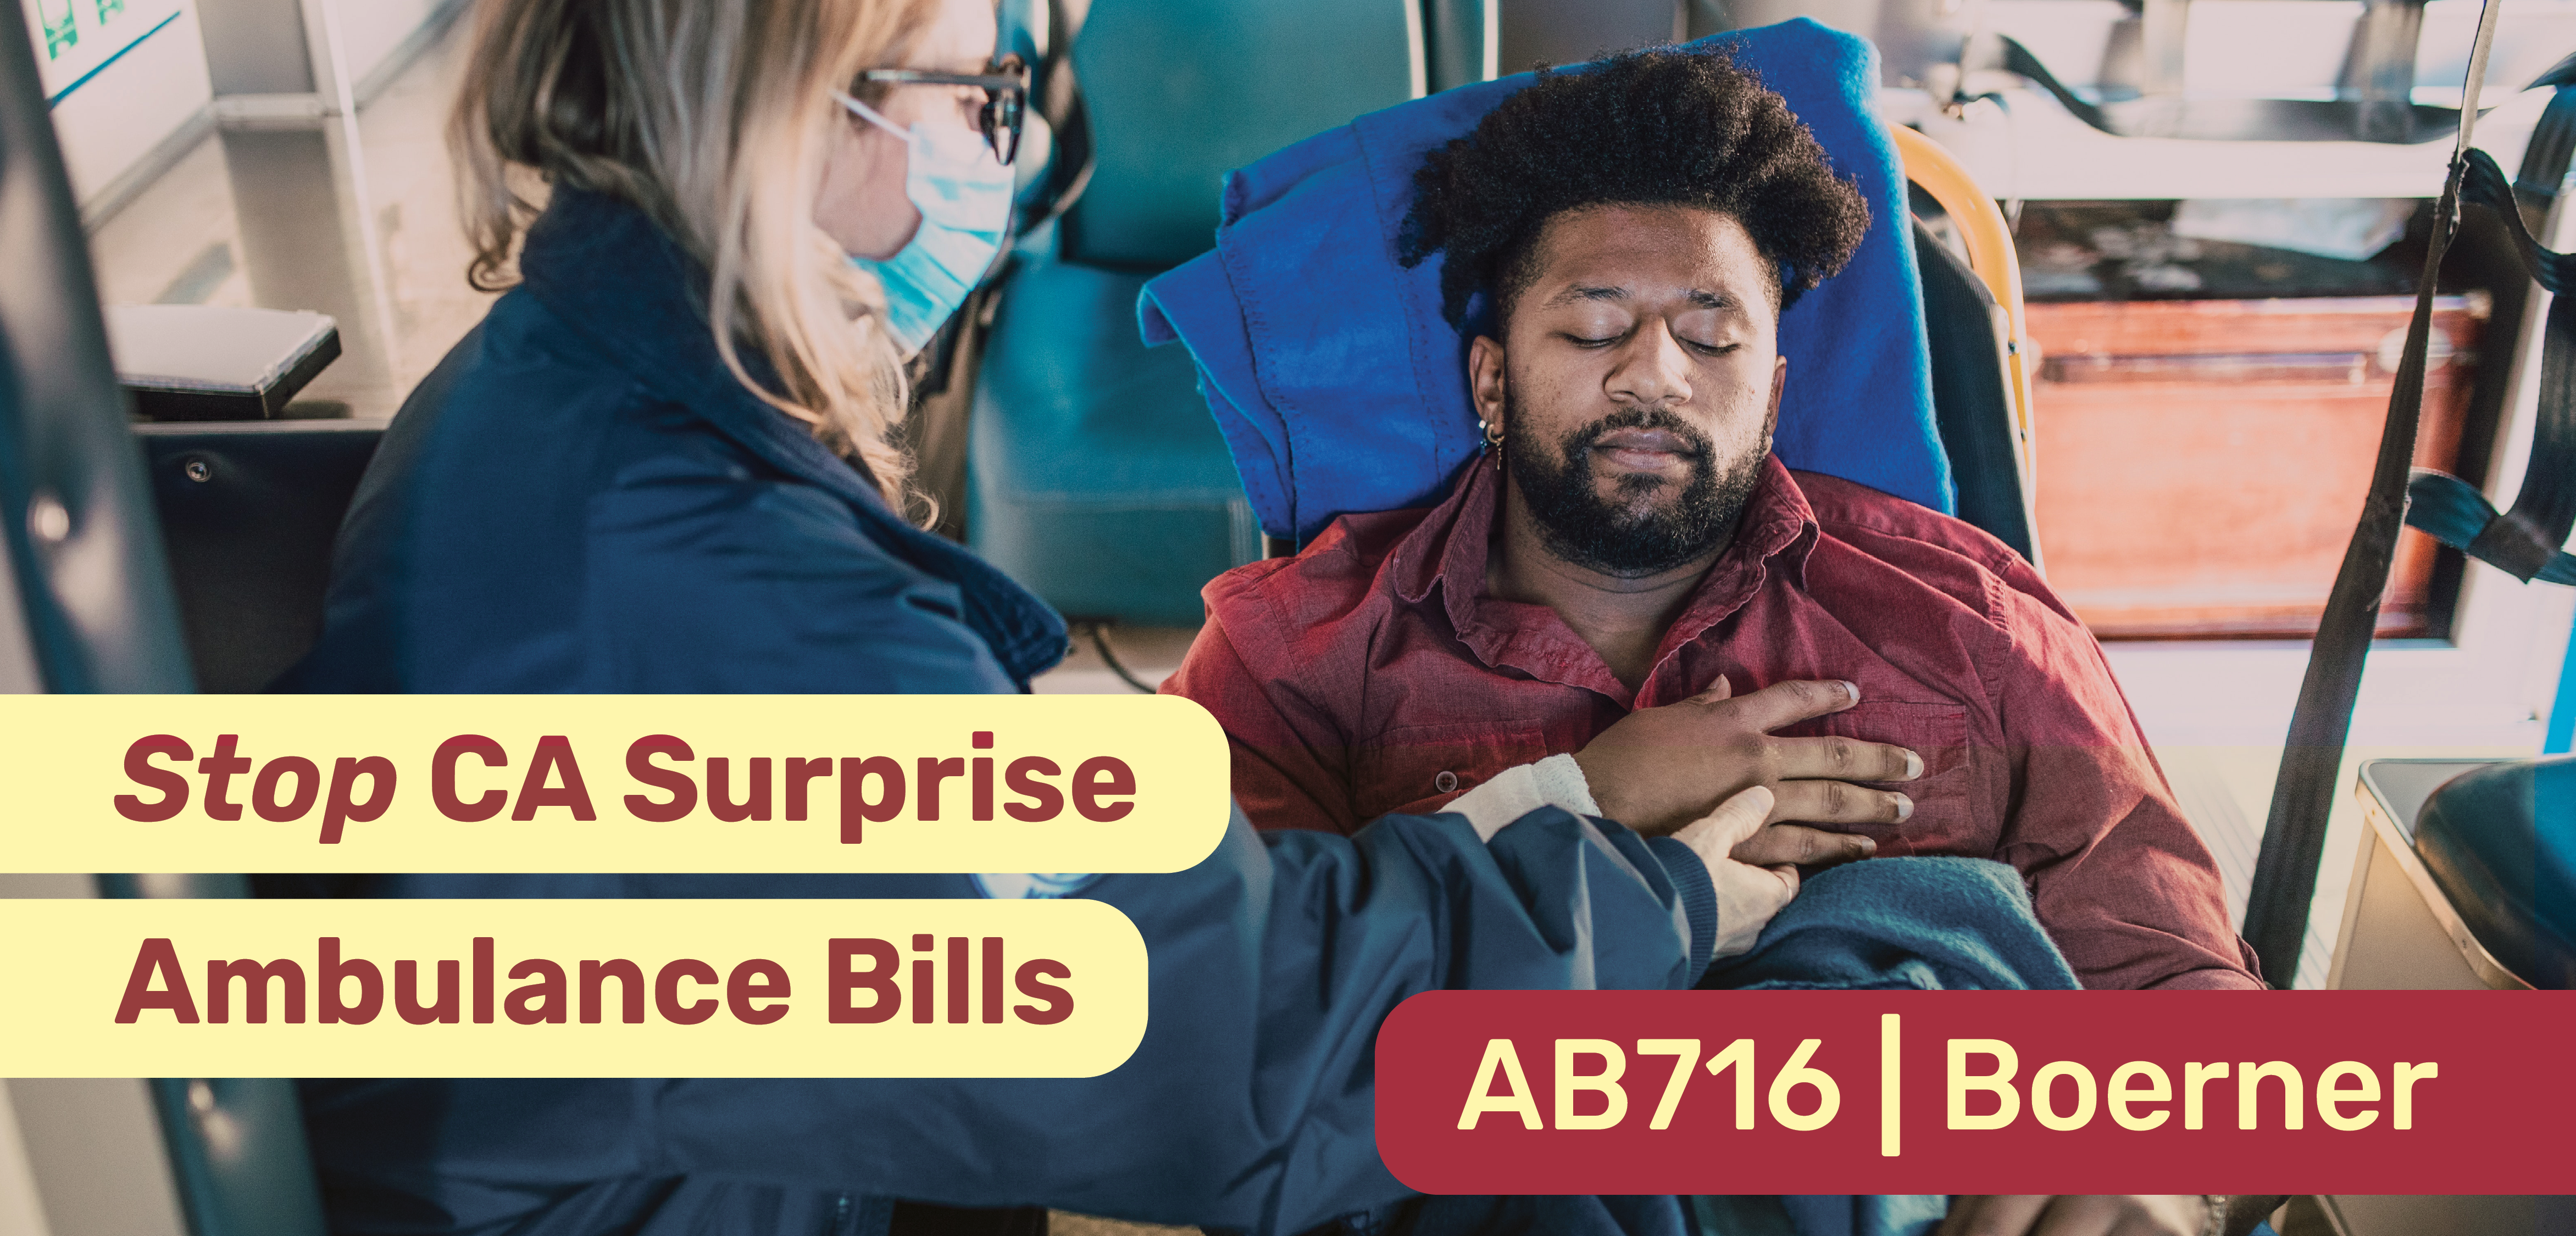 Californians Share Their Surprise Ambulance Bill Stories